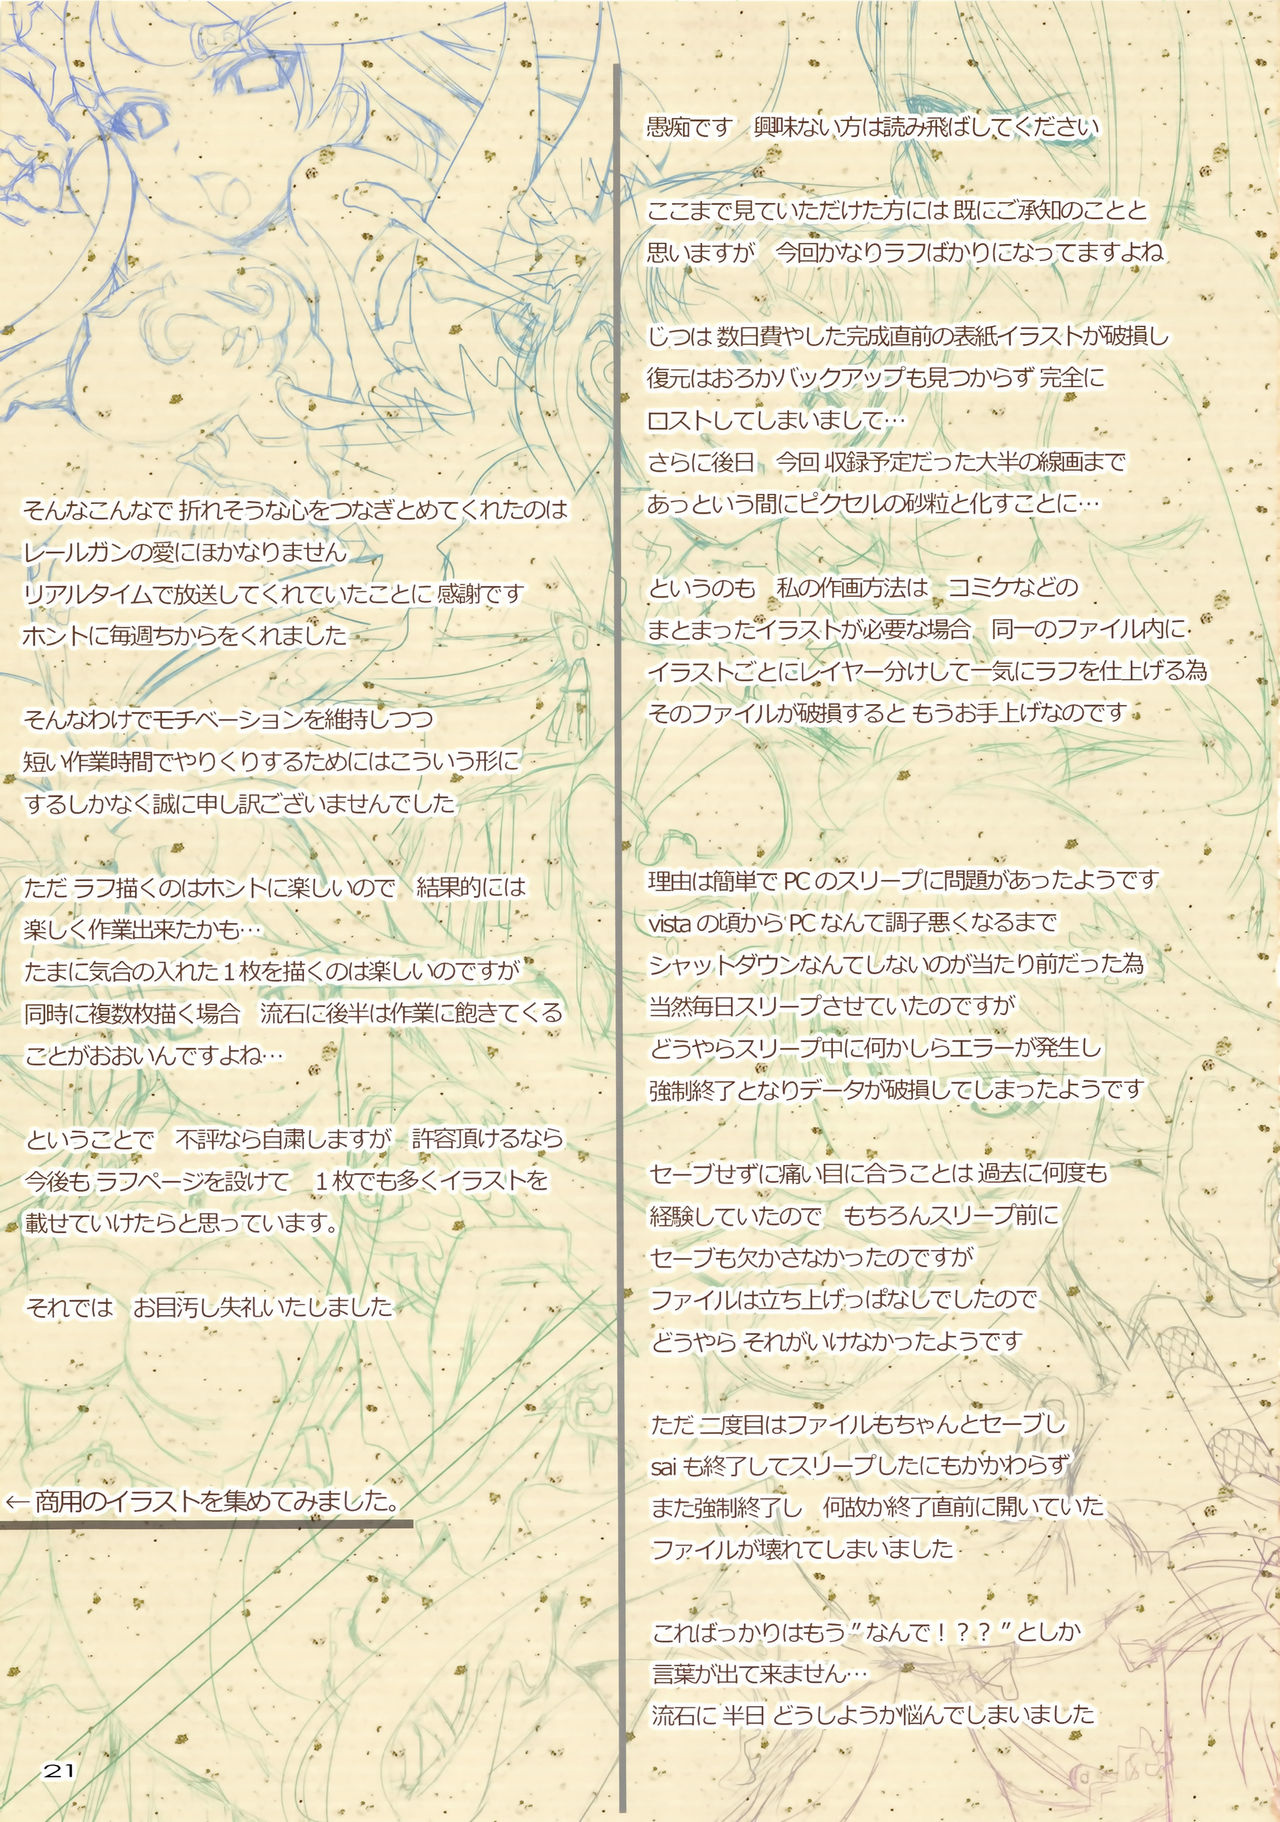 (C84) [TRI-MOON! (Mikazuki Akira!)] mik-oto (Toaru Kagaku no Railgun) (C84) [TRI-MOON! (みかづきあきら!)] TRI-MOON! full color collection Vol.13 mik-oto (とある科学の超電磁砲)